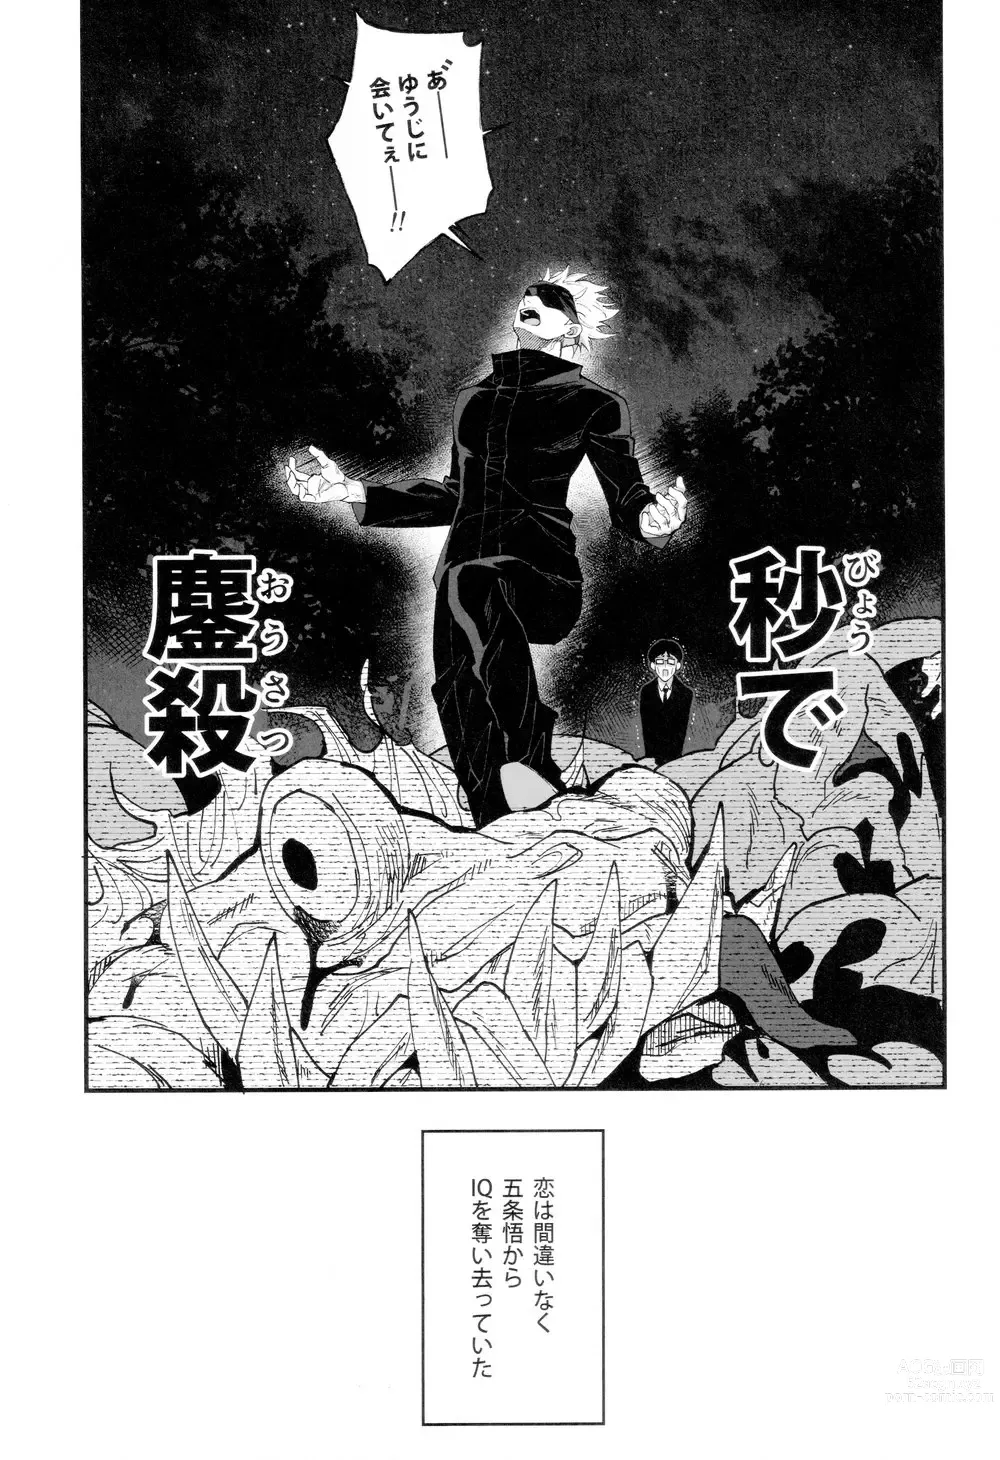 Page 9 of doujinshi Gachikoi Monster